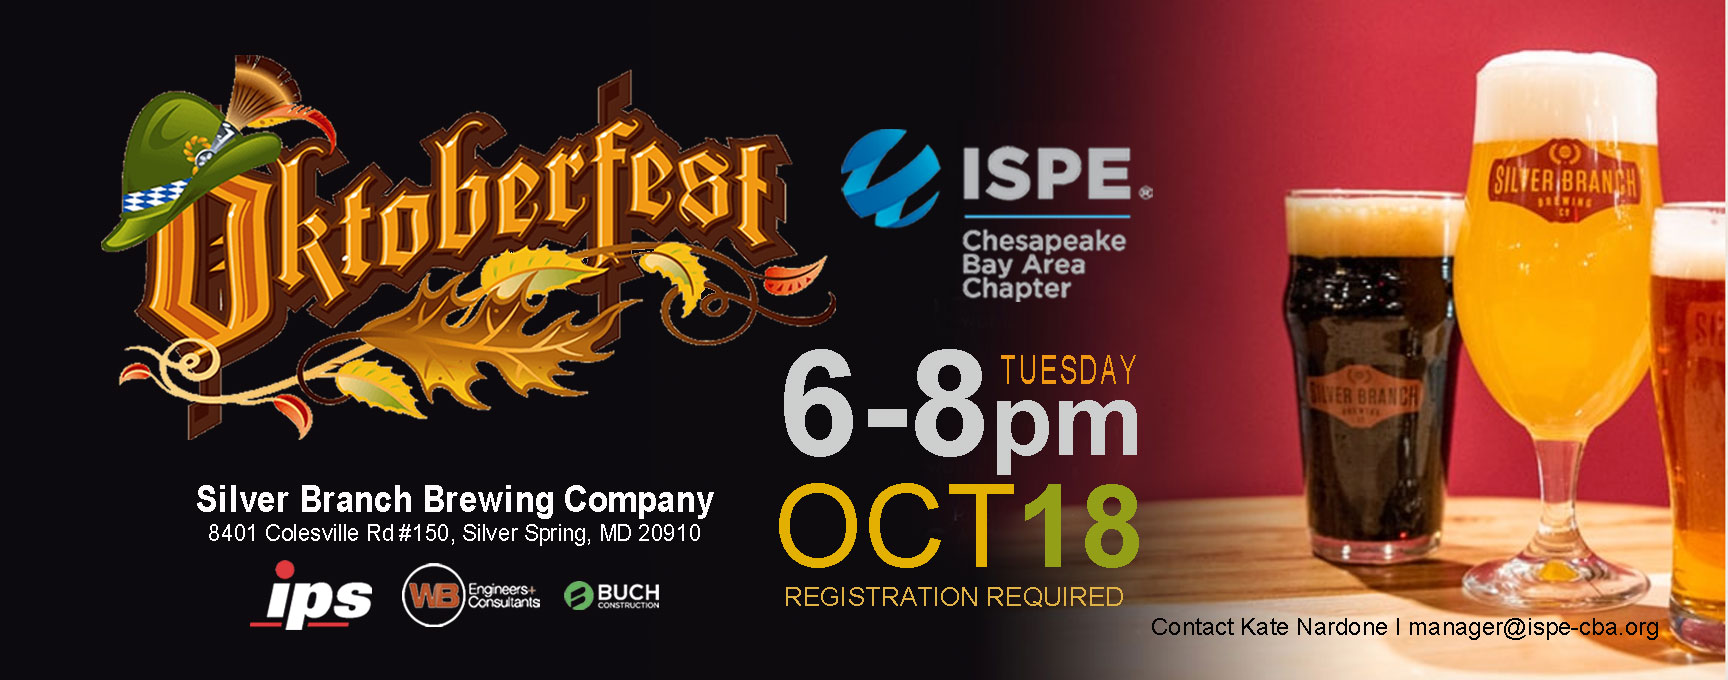 ISPE-CBA Chapter Oktoberfest